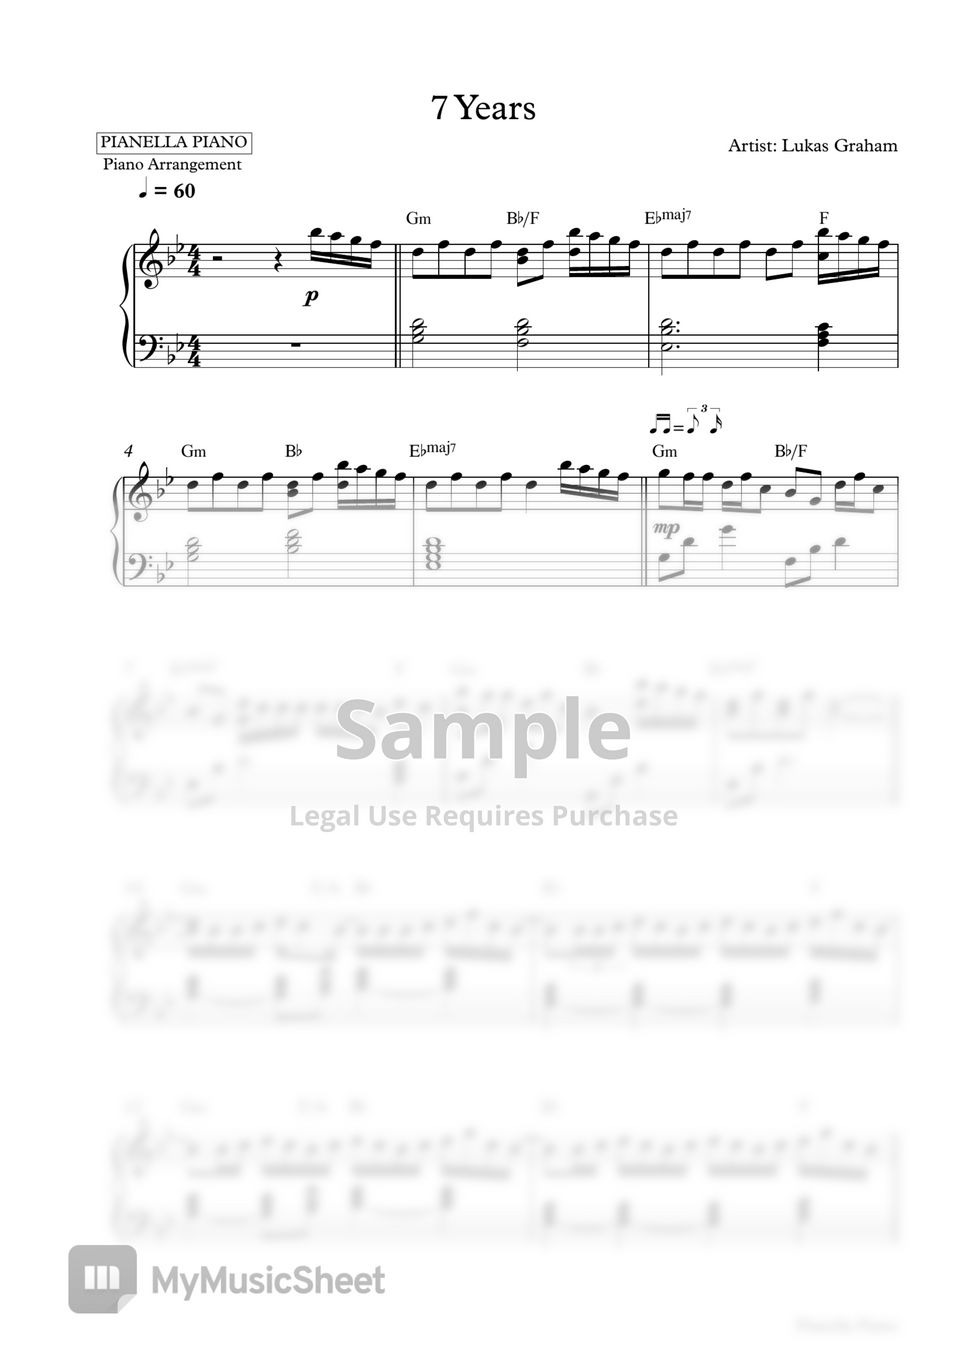 Lukas Graham - 7 Years (Piano Sheet) by Pianella Piano